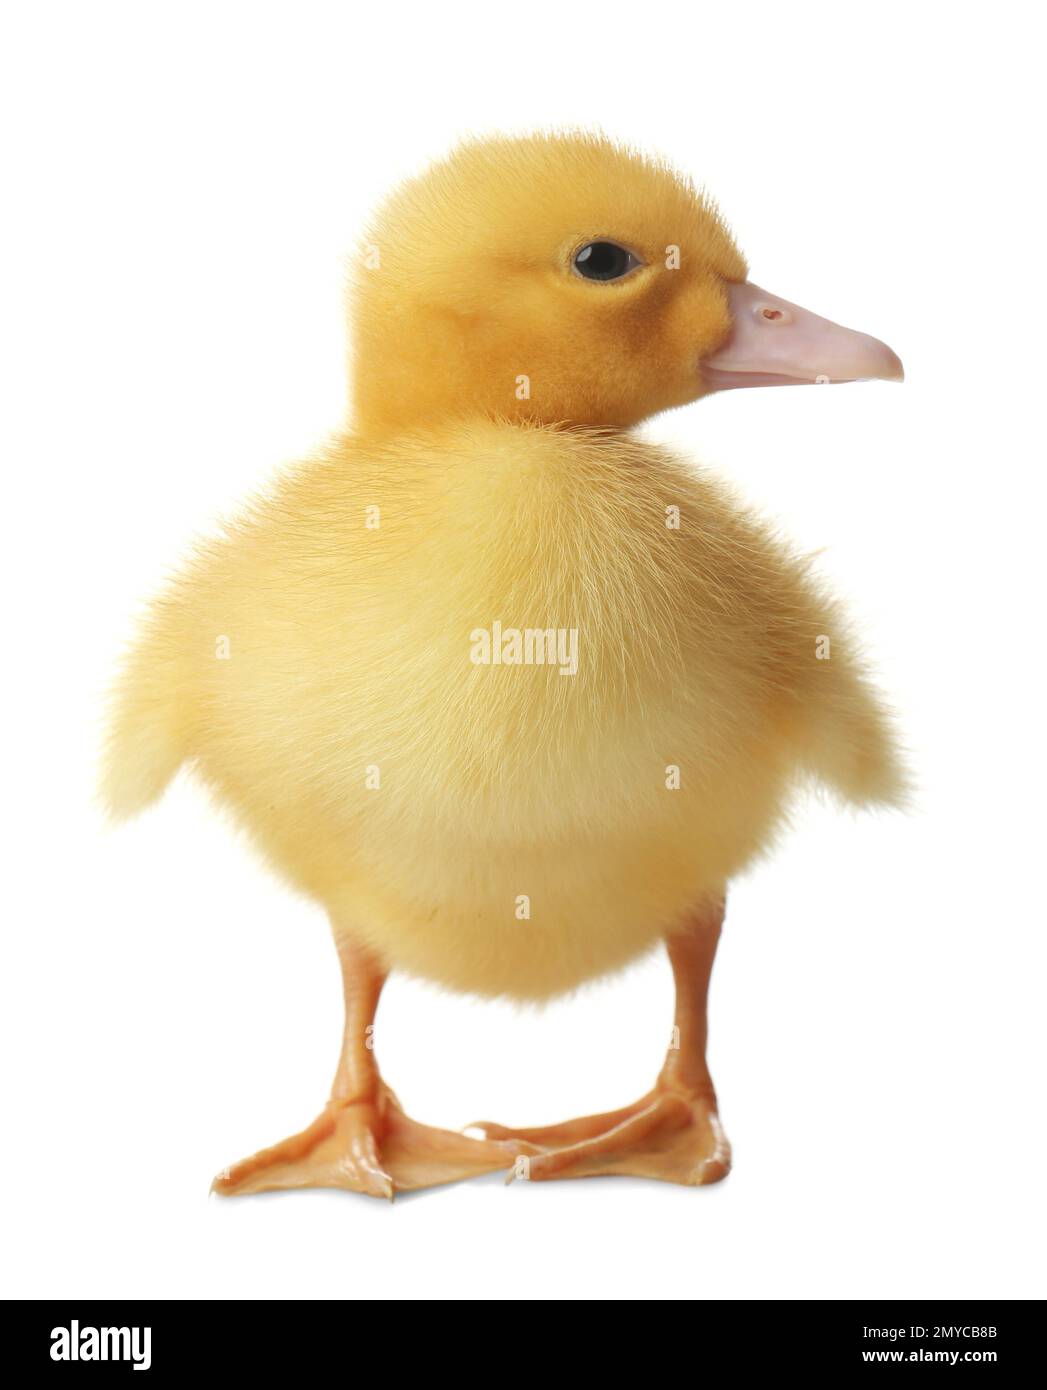 Cute fluffy gosling on white background. Farm animal Stock Photo